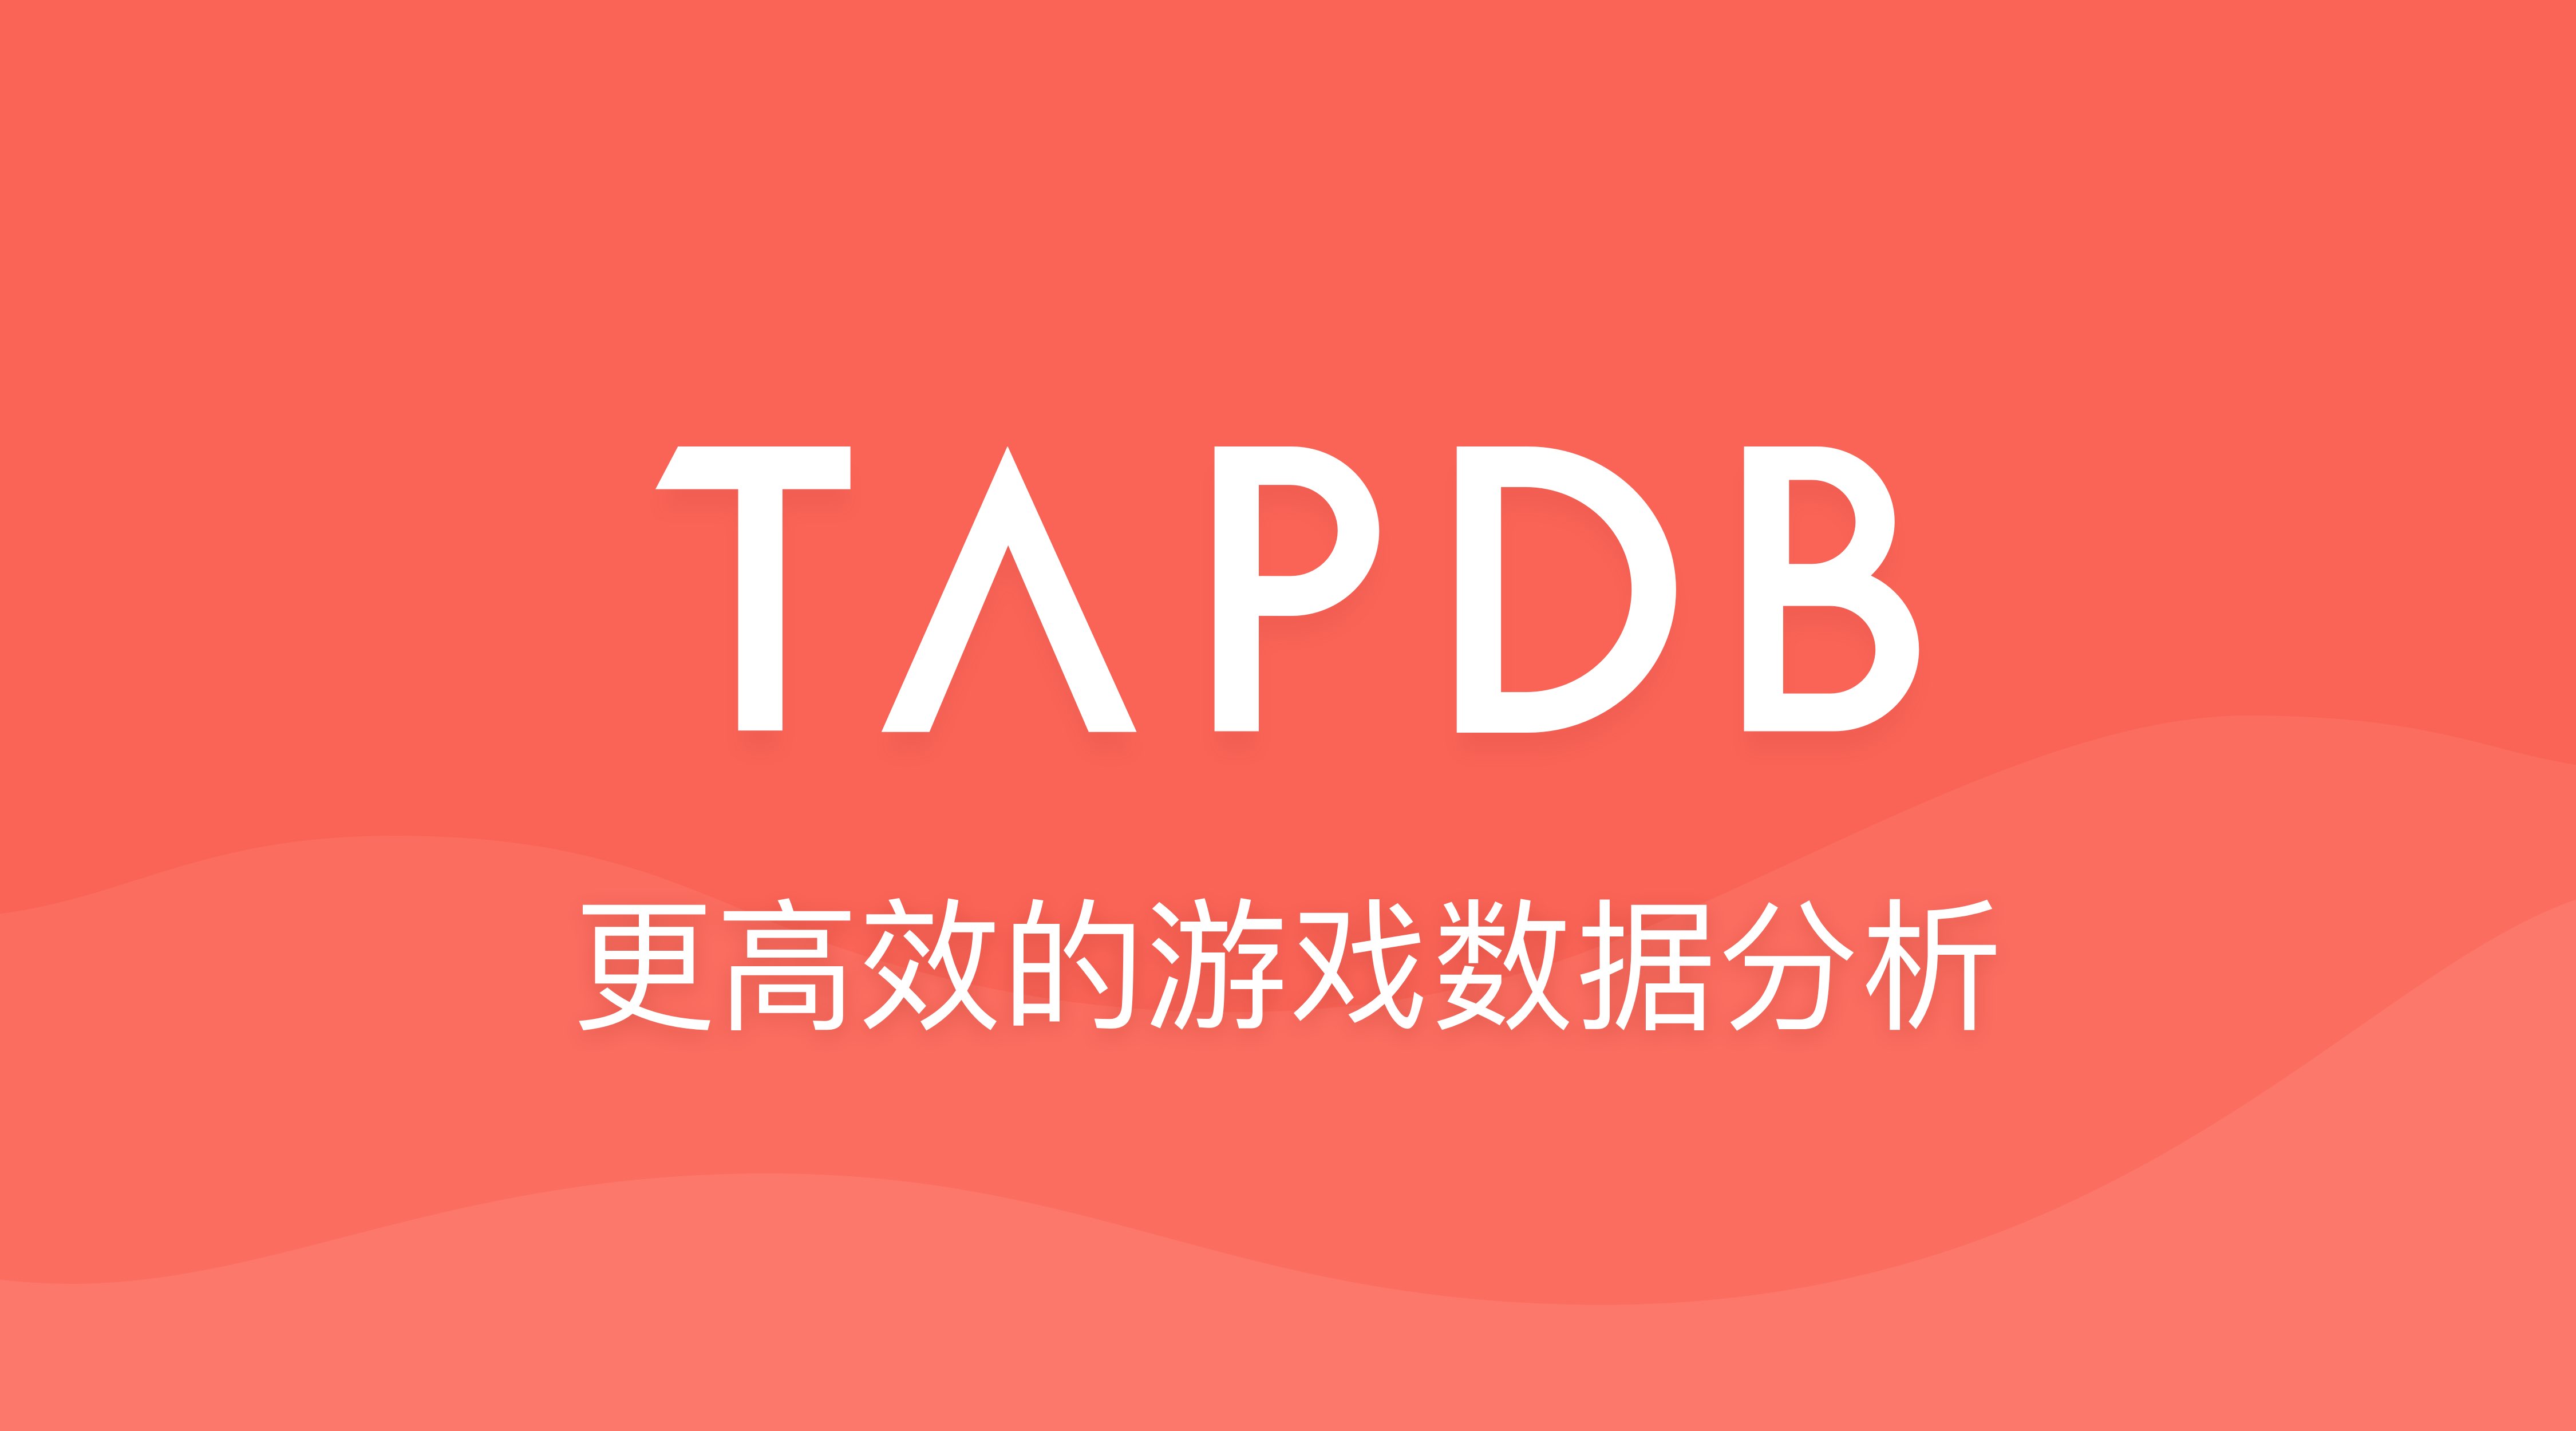 TapTap面向游戏厂商推出独立数据分析产品TapDB